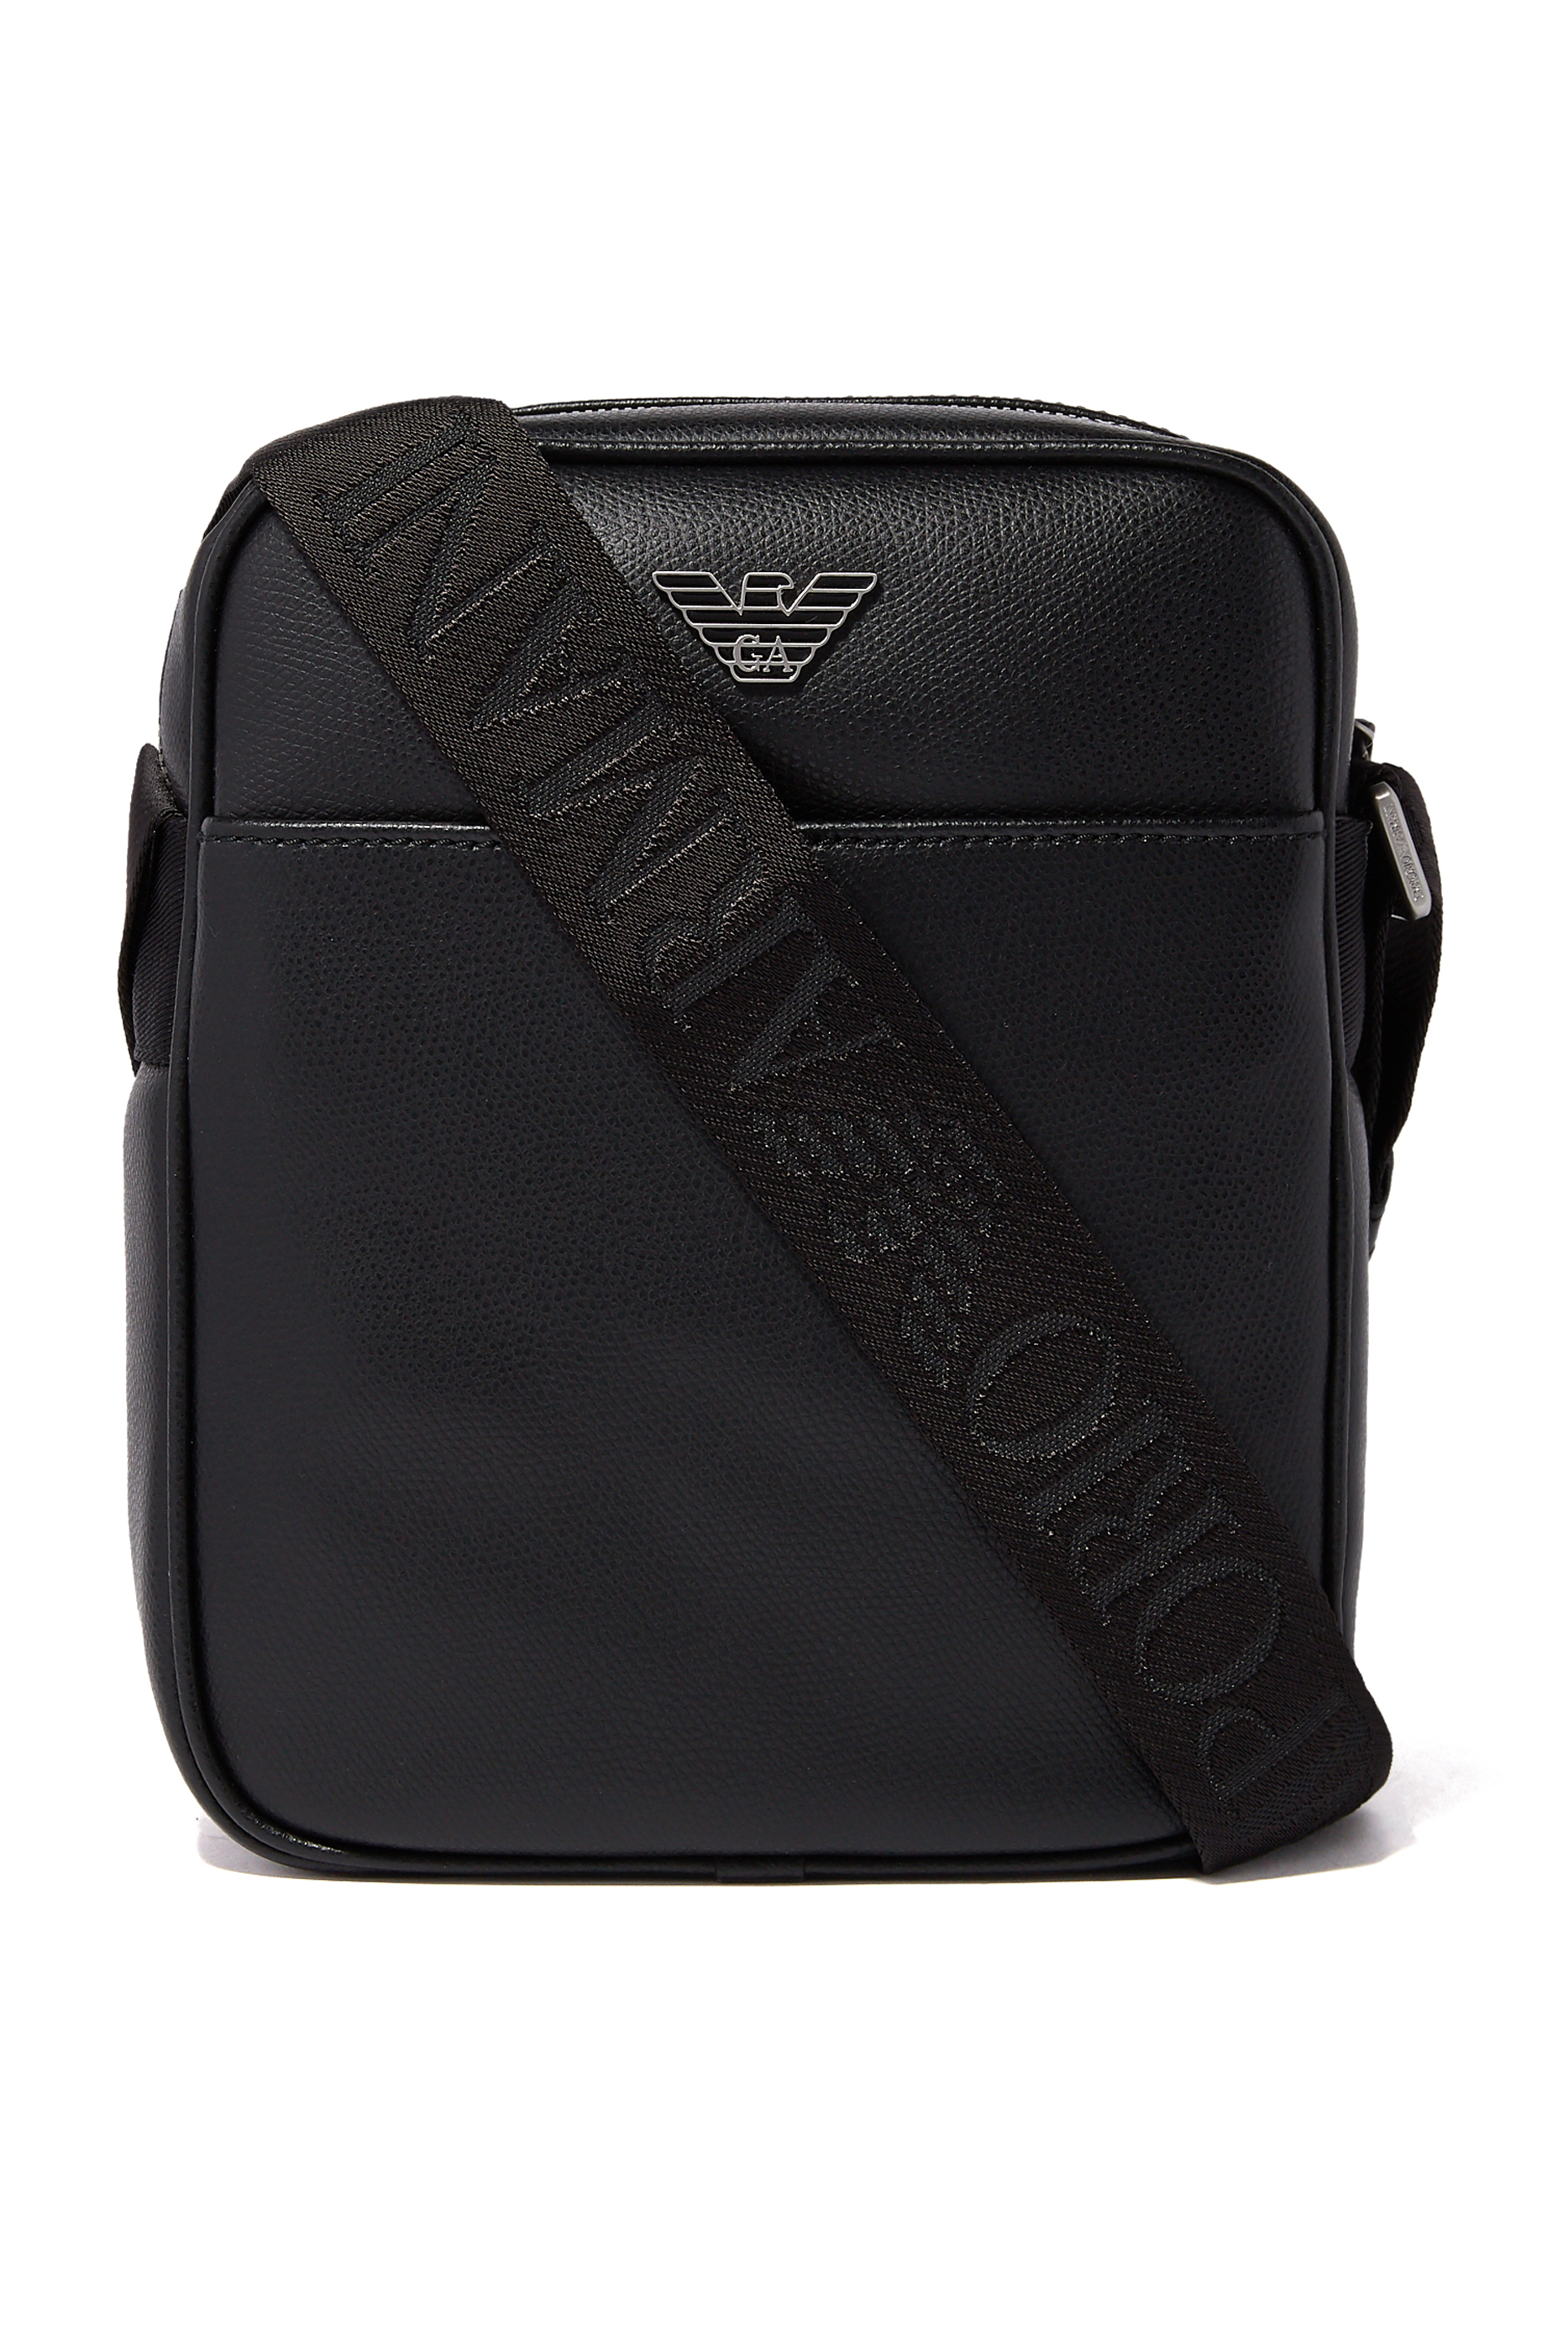 Buy Emporio Armani Cross Body Bag for Mens | Bloomingdale's UAE